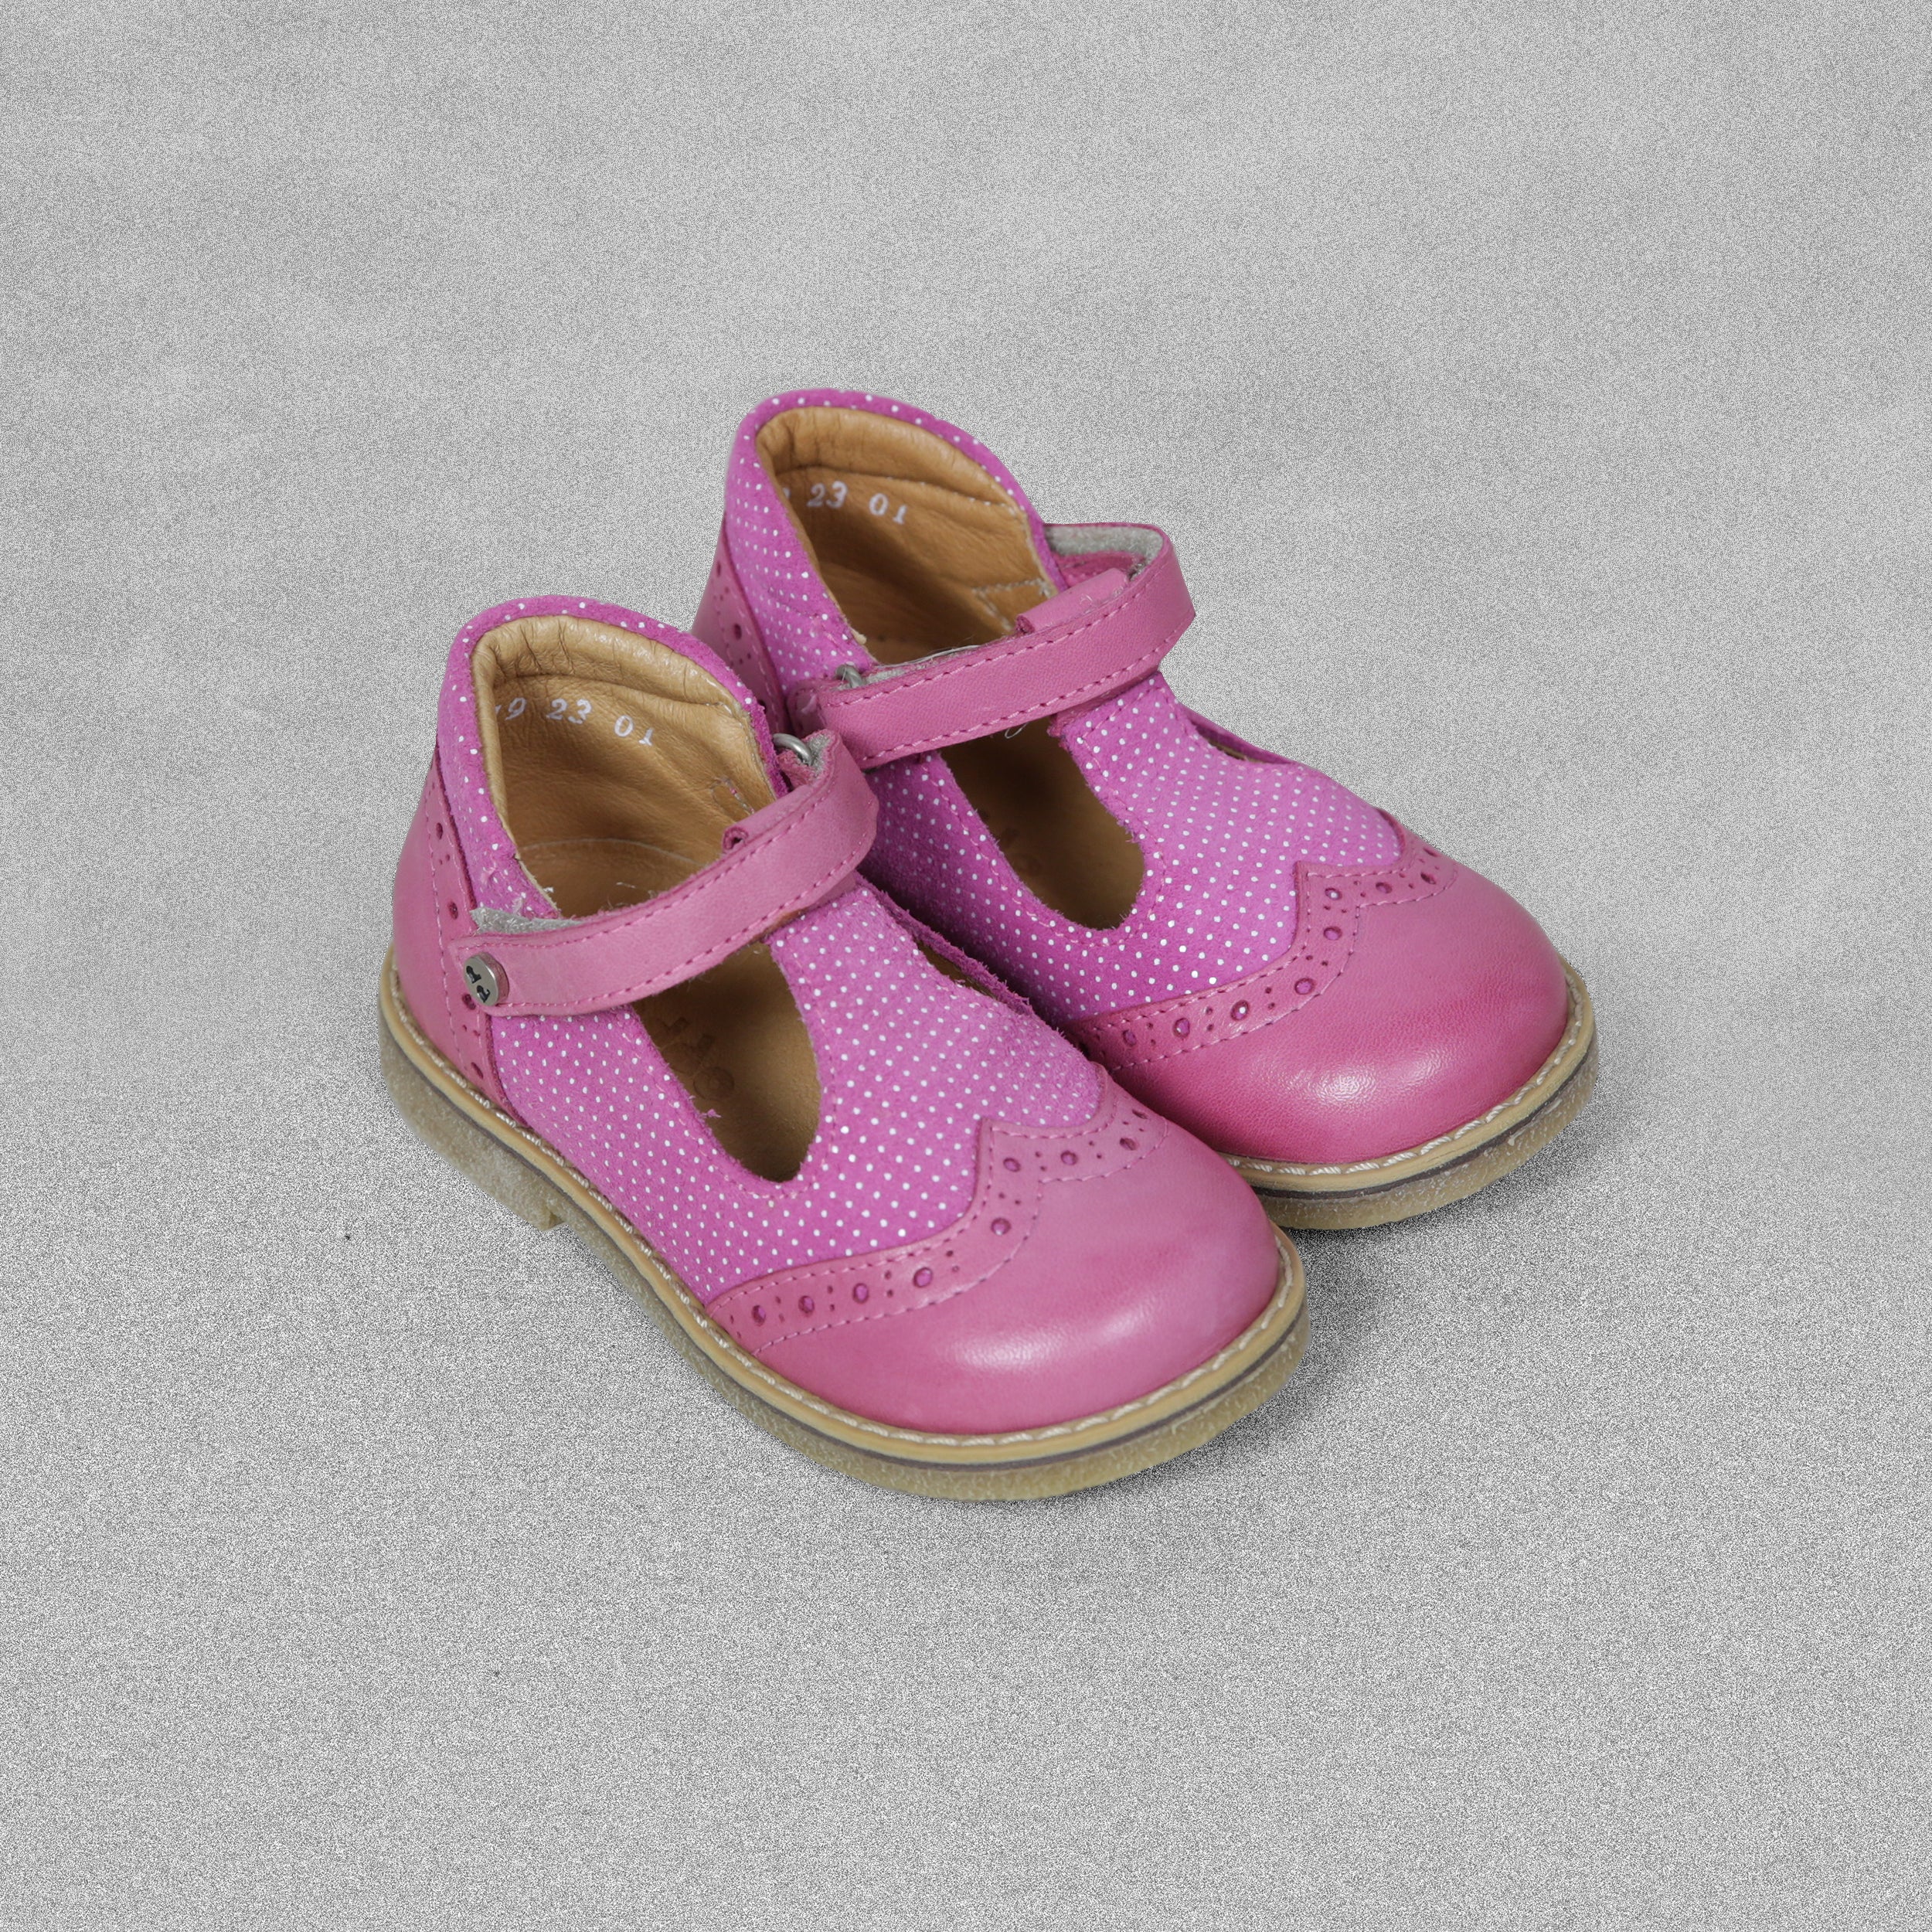 'Froddo' TBar Velcro  - Leather Shoes Fuchsia Pink - EU23